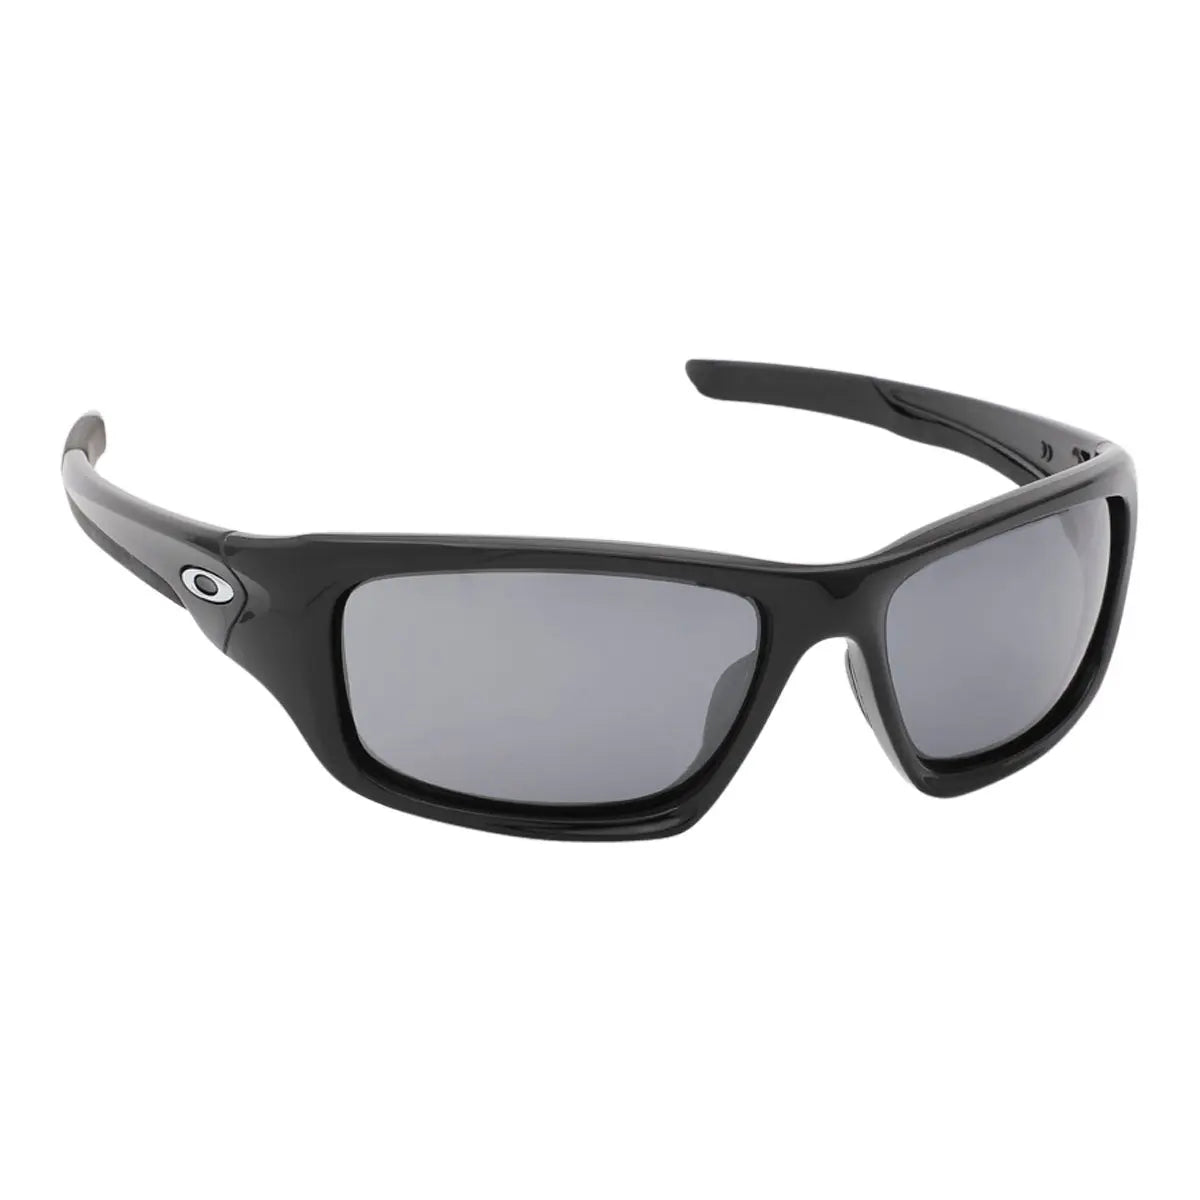 Top 88+ imagen cheap oakley polarized sunglasses